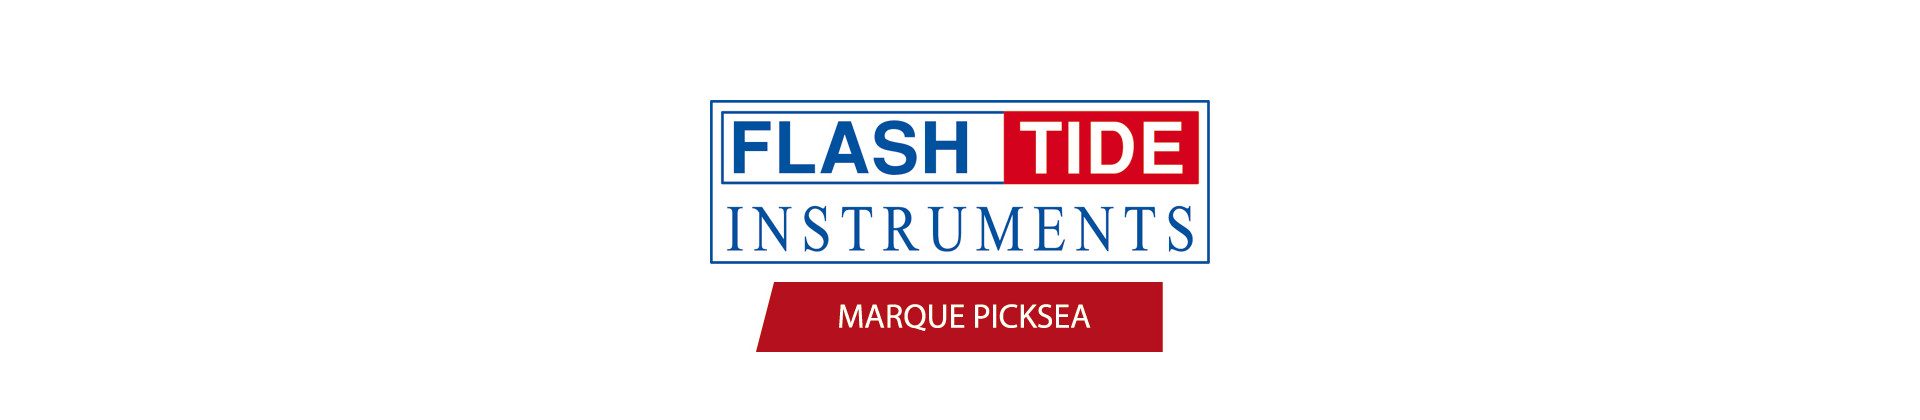 Flash-Tide Instruments Shop